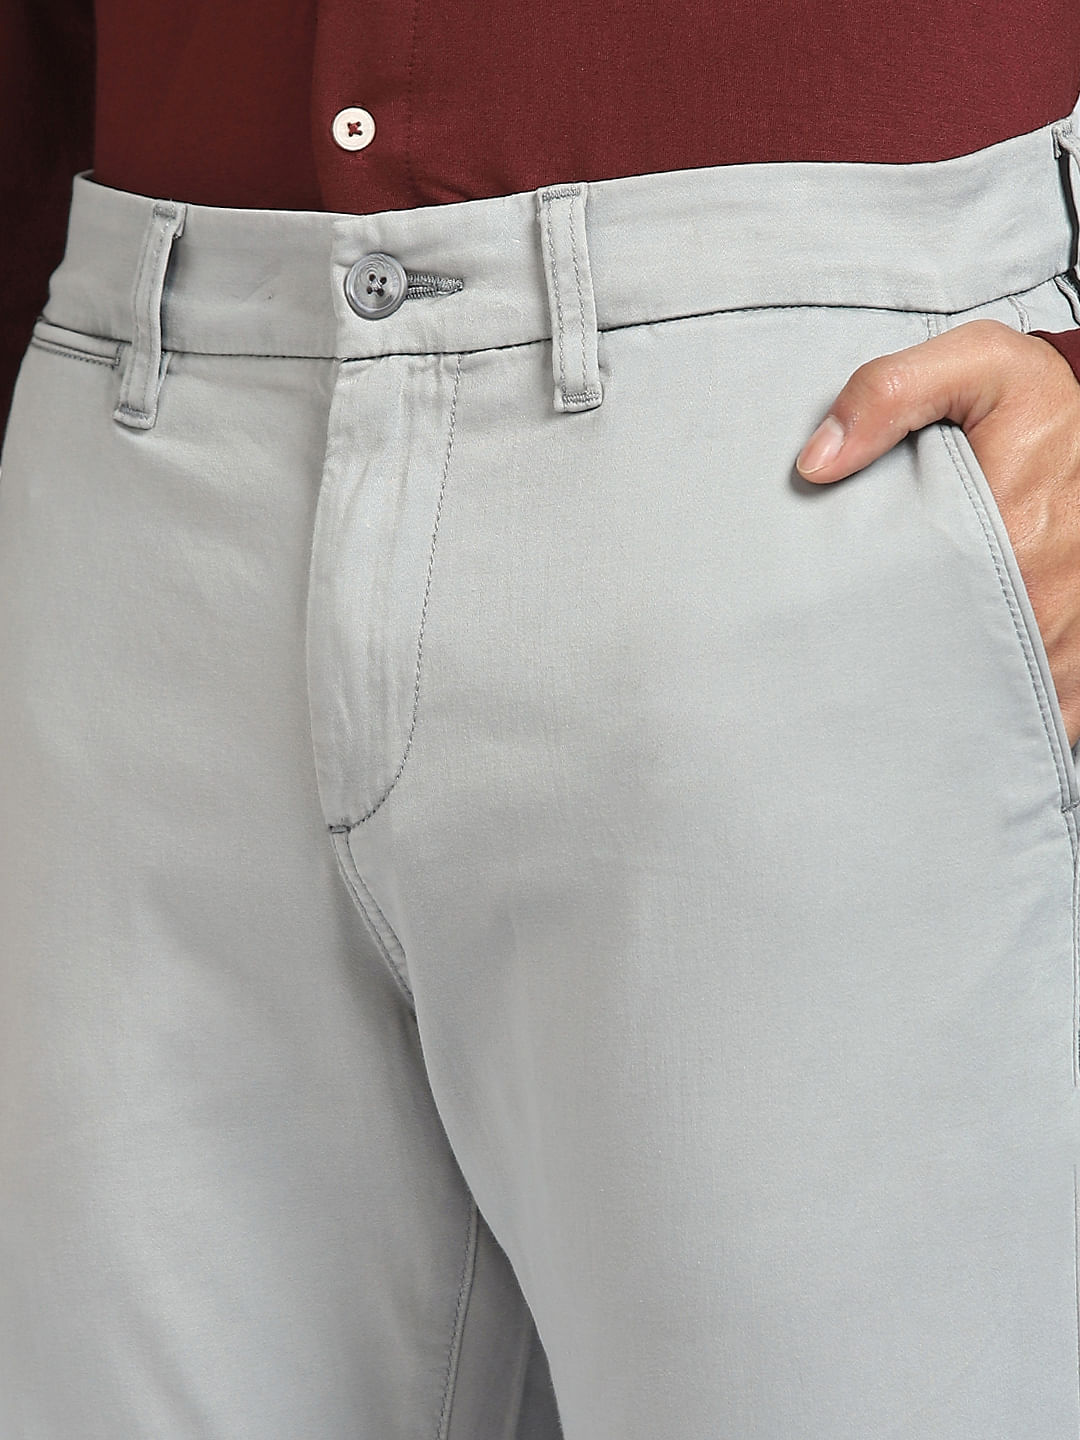 Buy Mens Cotton Lycra Casual Wear Slim Fit PantsCottonworld